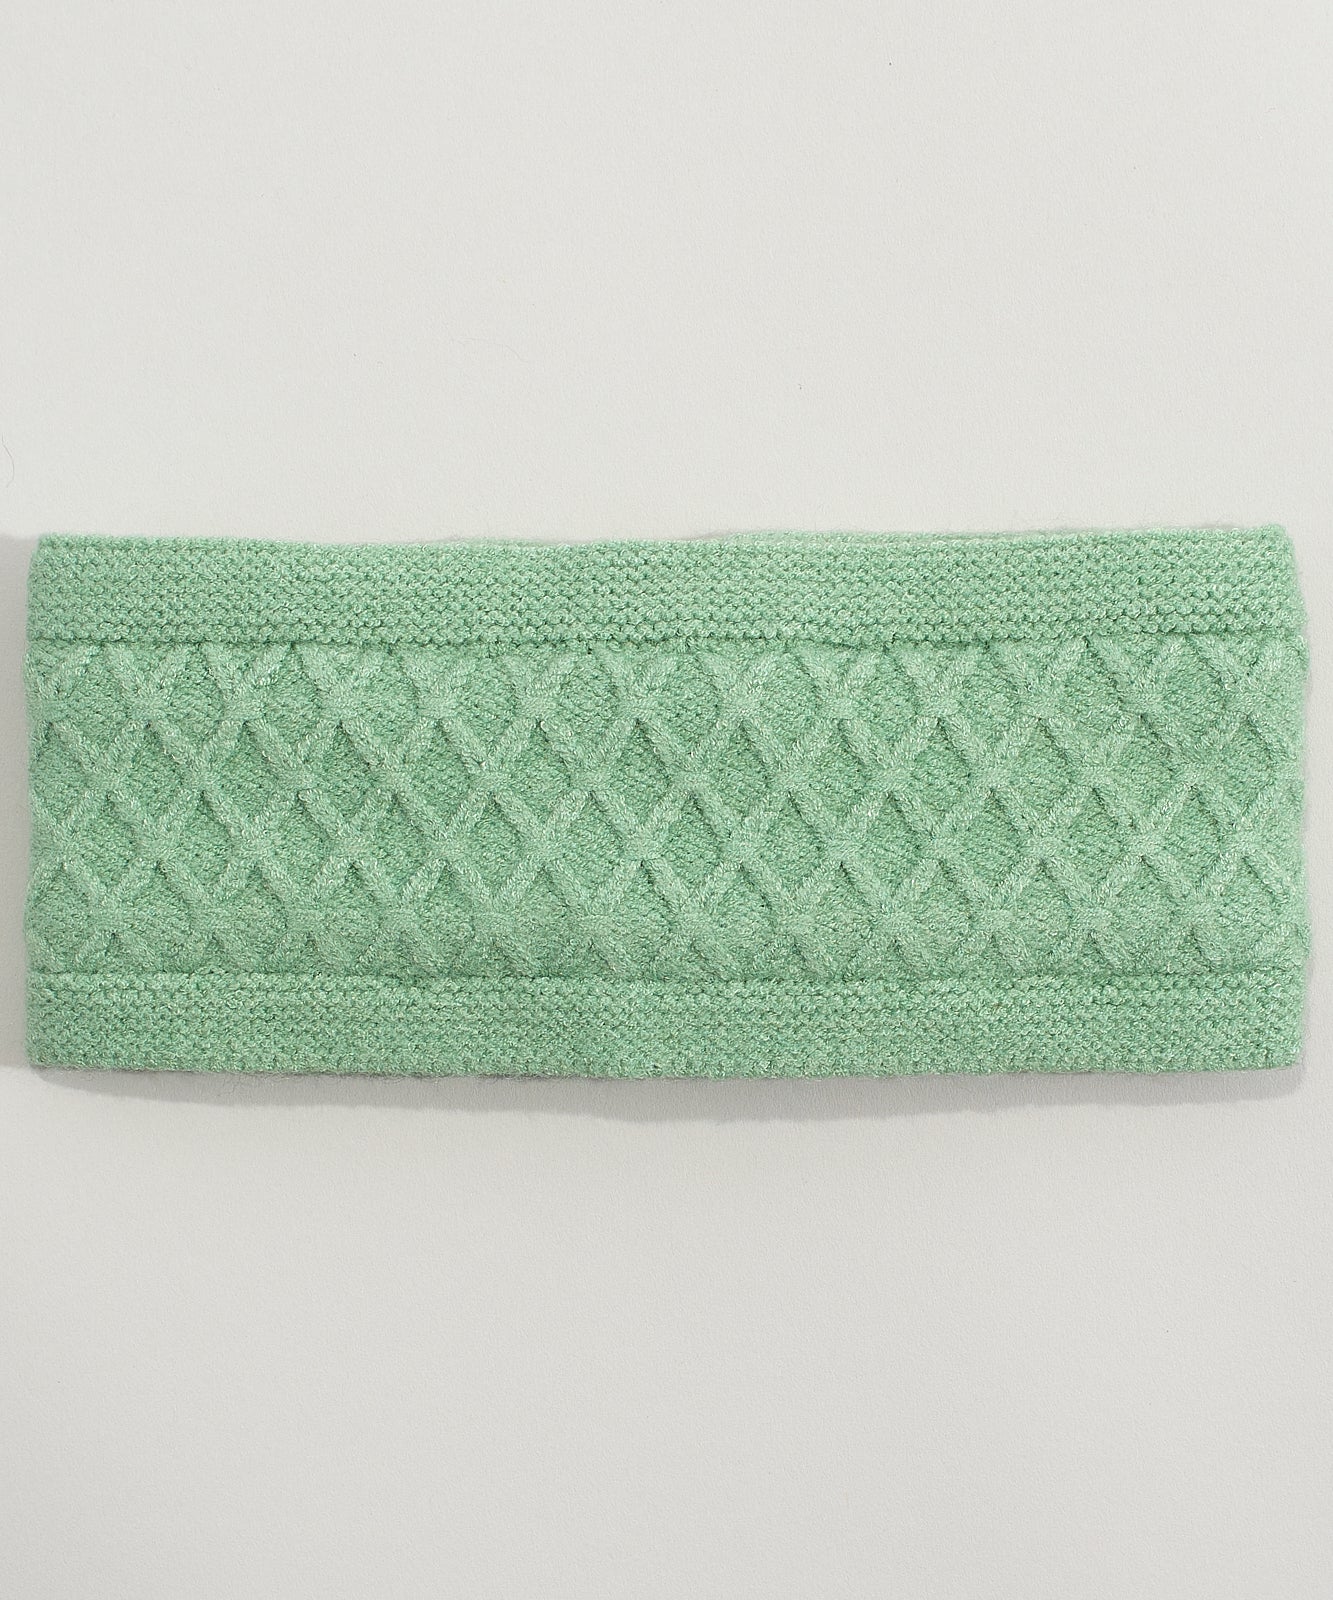 Diamond Cable Headband in color Jade Mint